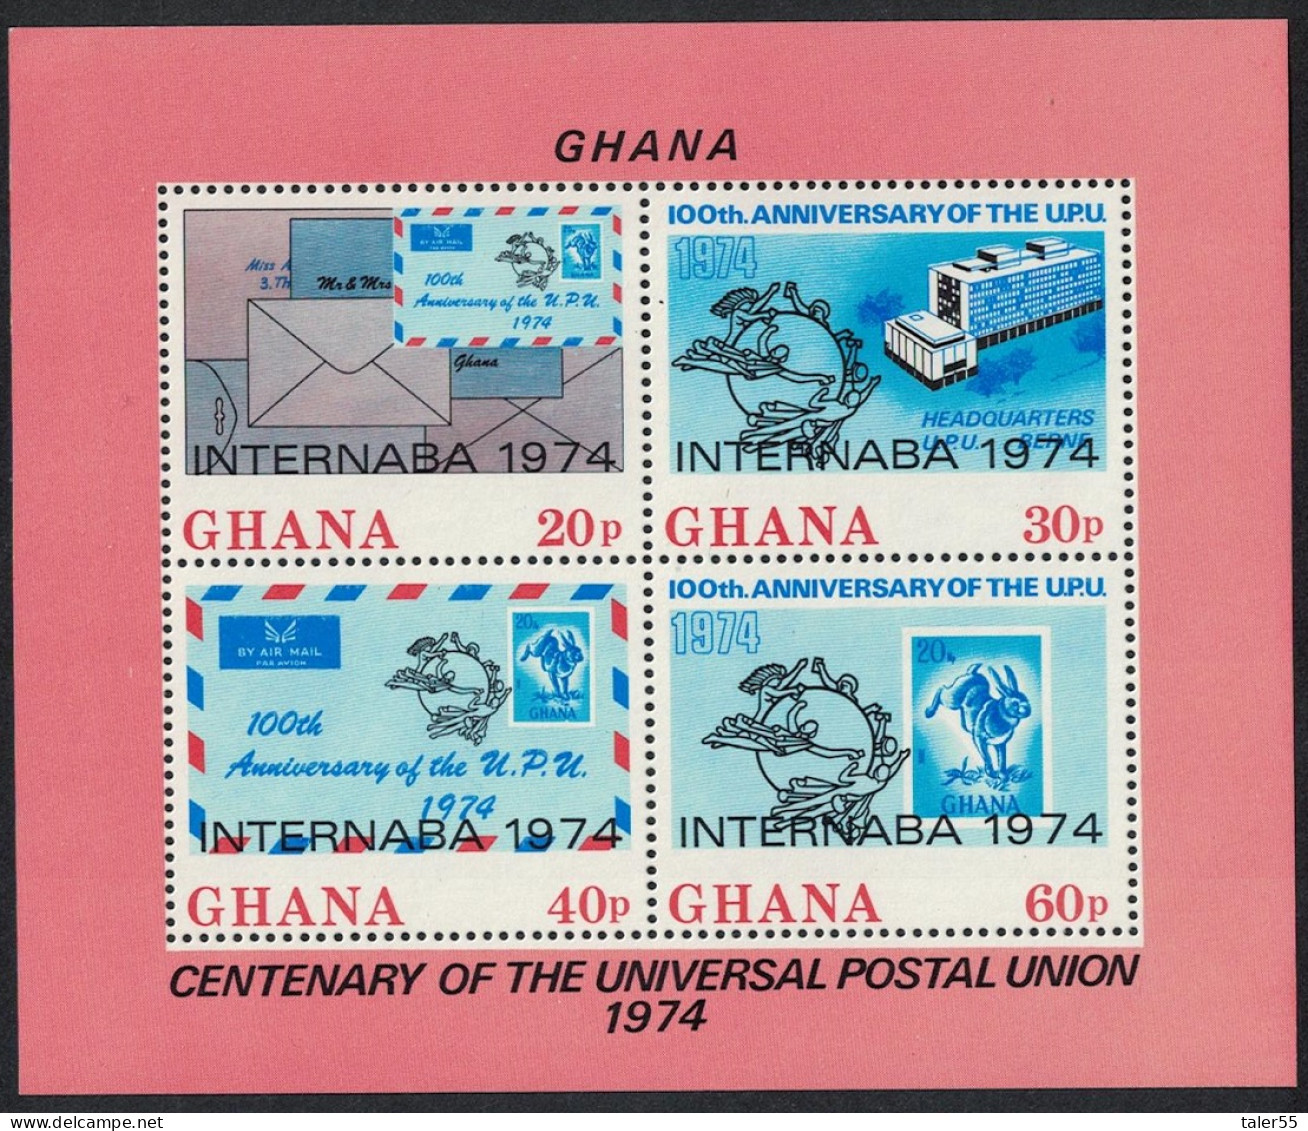 Ghana 'Internaba 1974' Stamp Exhibition MS 1974 MNH SG#MS714 - Ghana (1957-...)